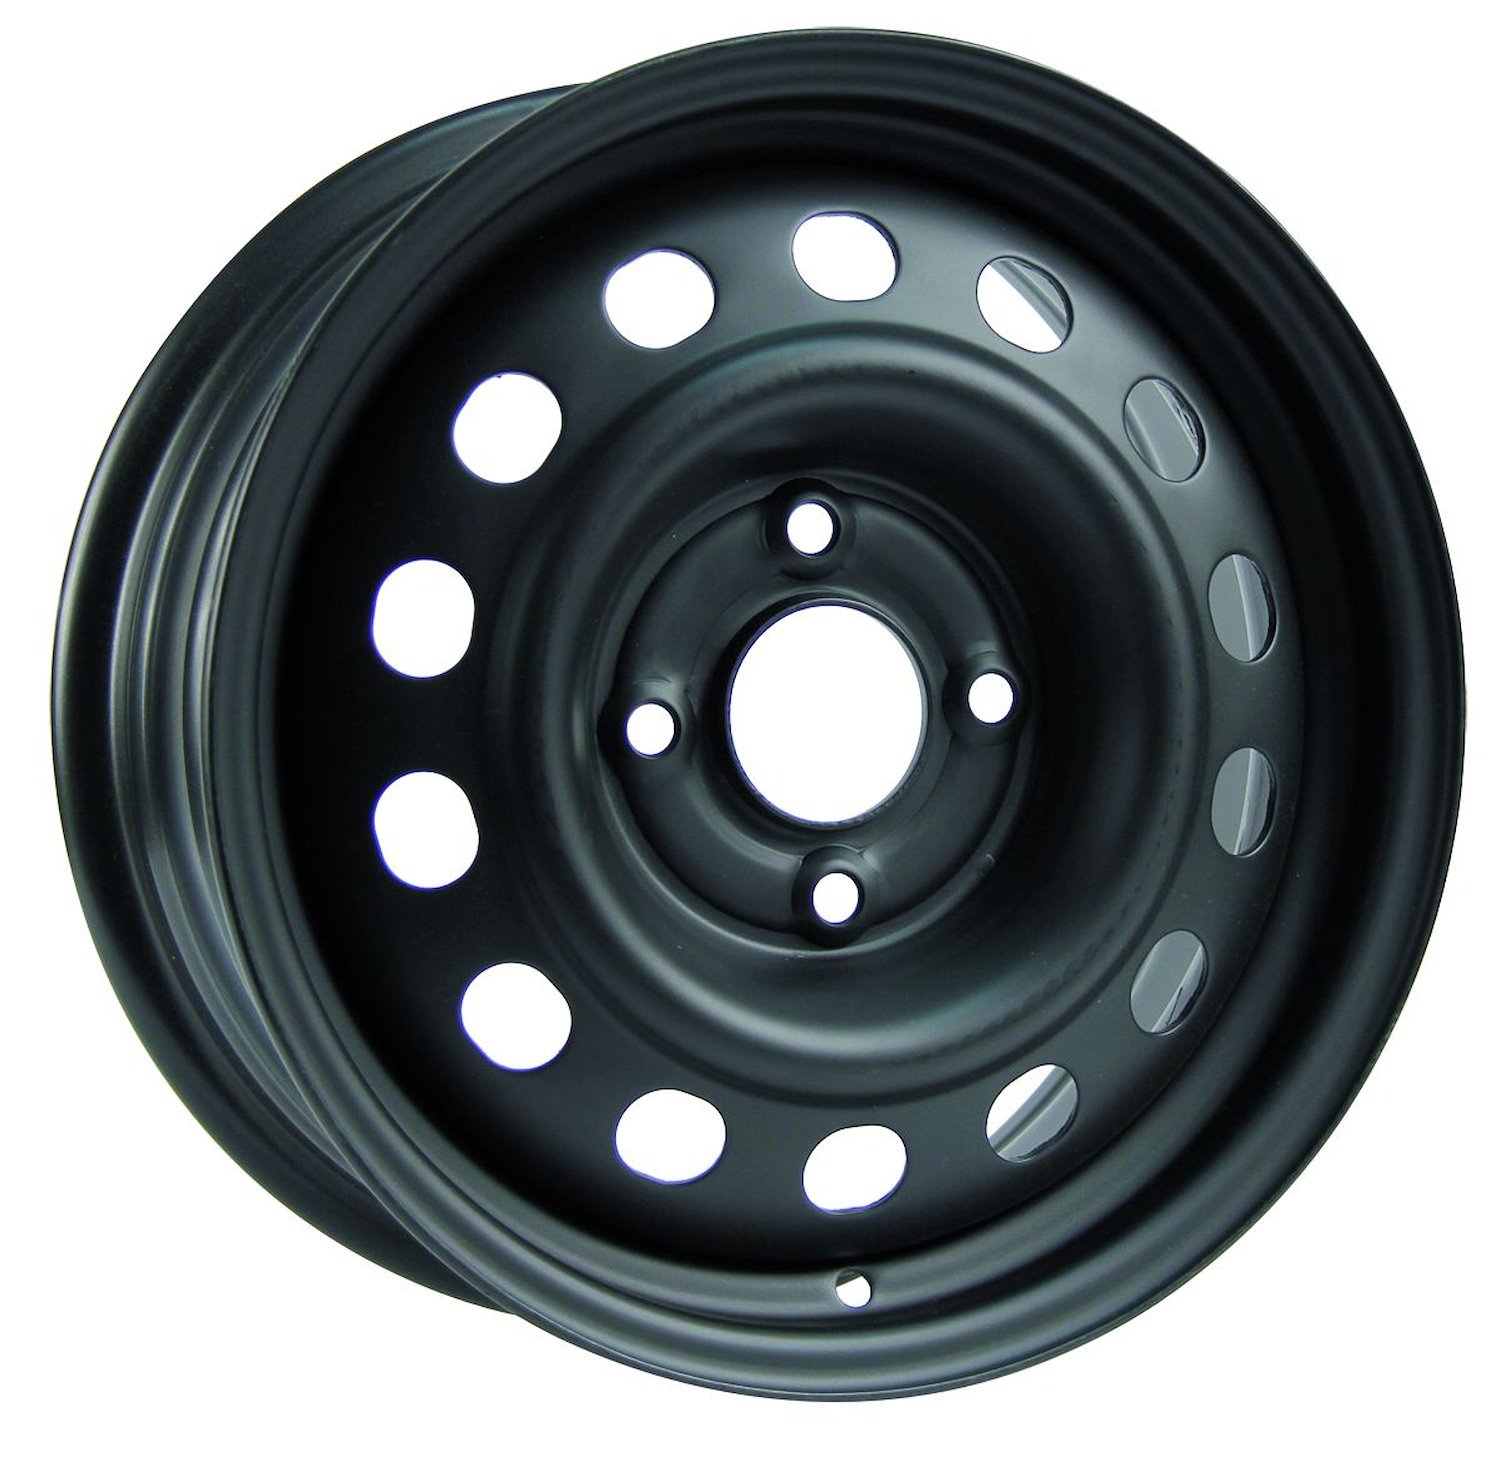 X40619 Steel Wheel [Size: 15" x 6"] Black Finish